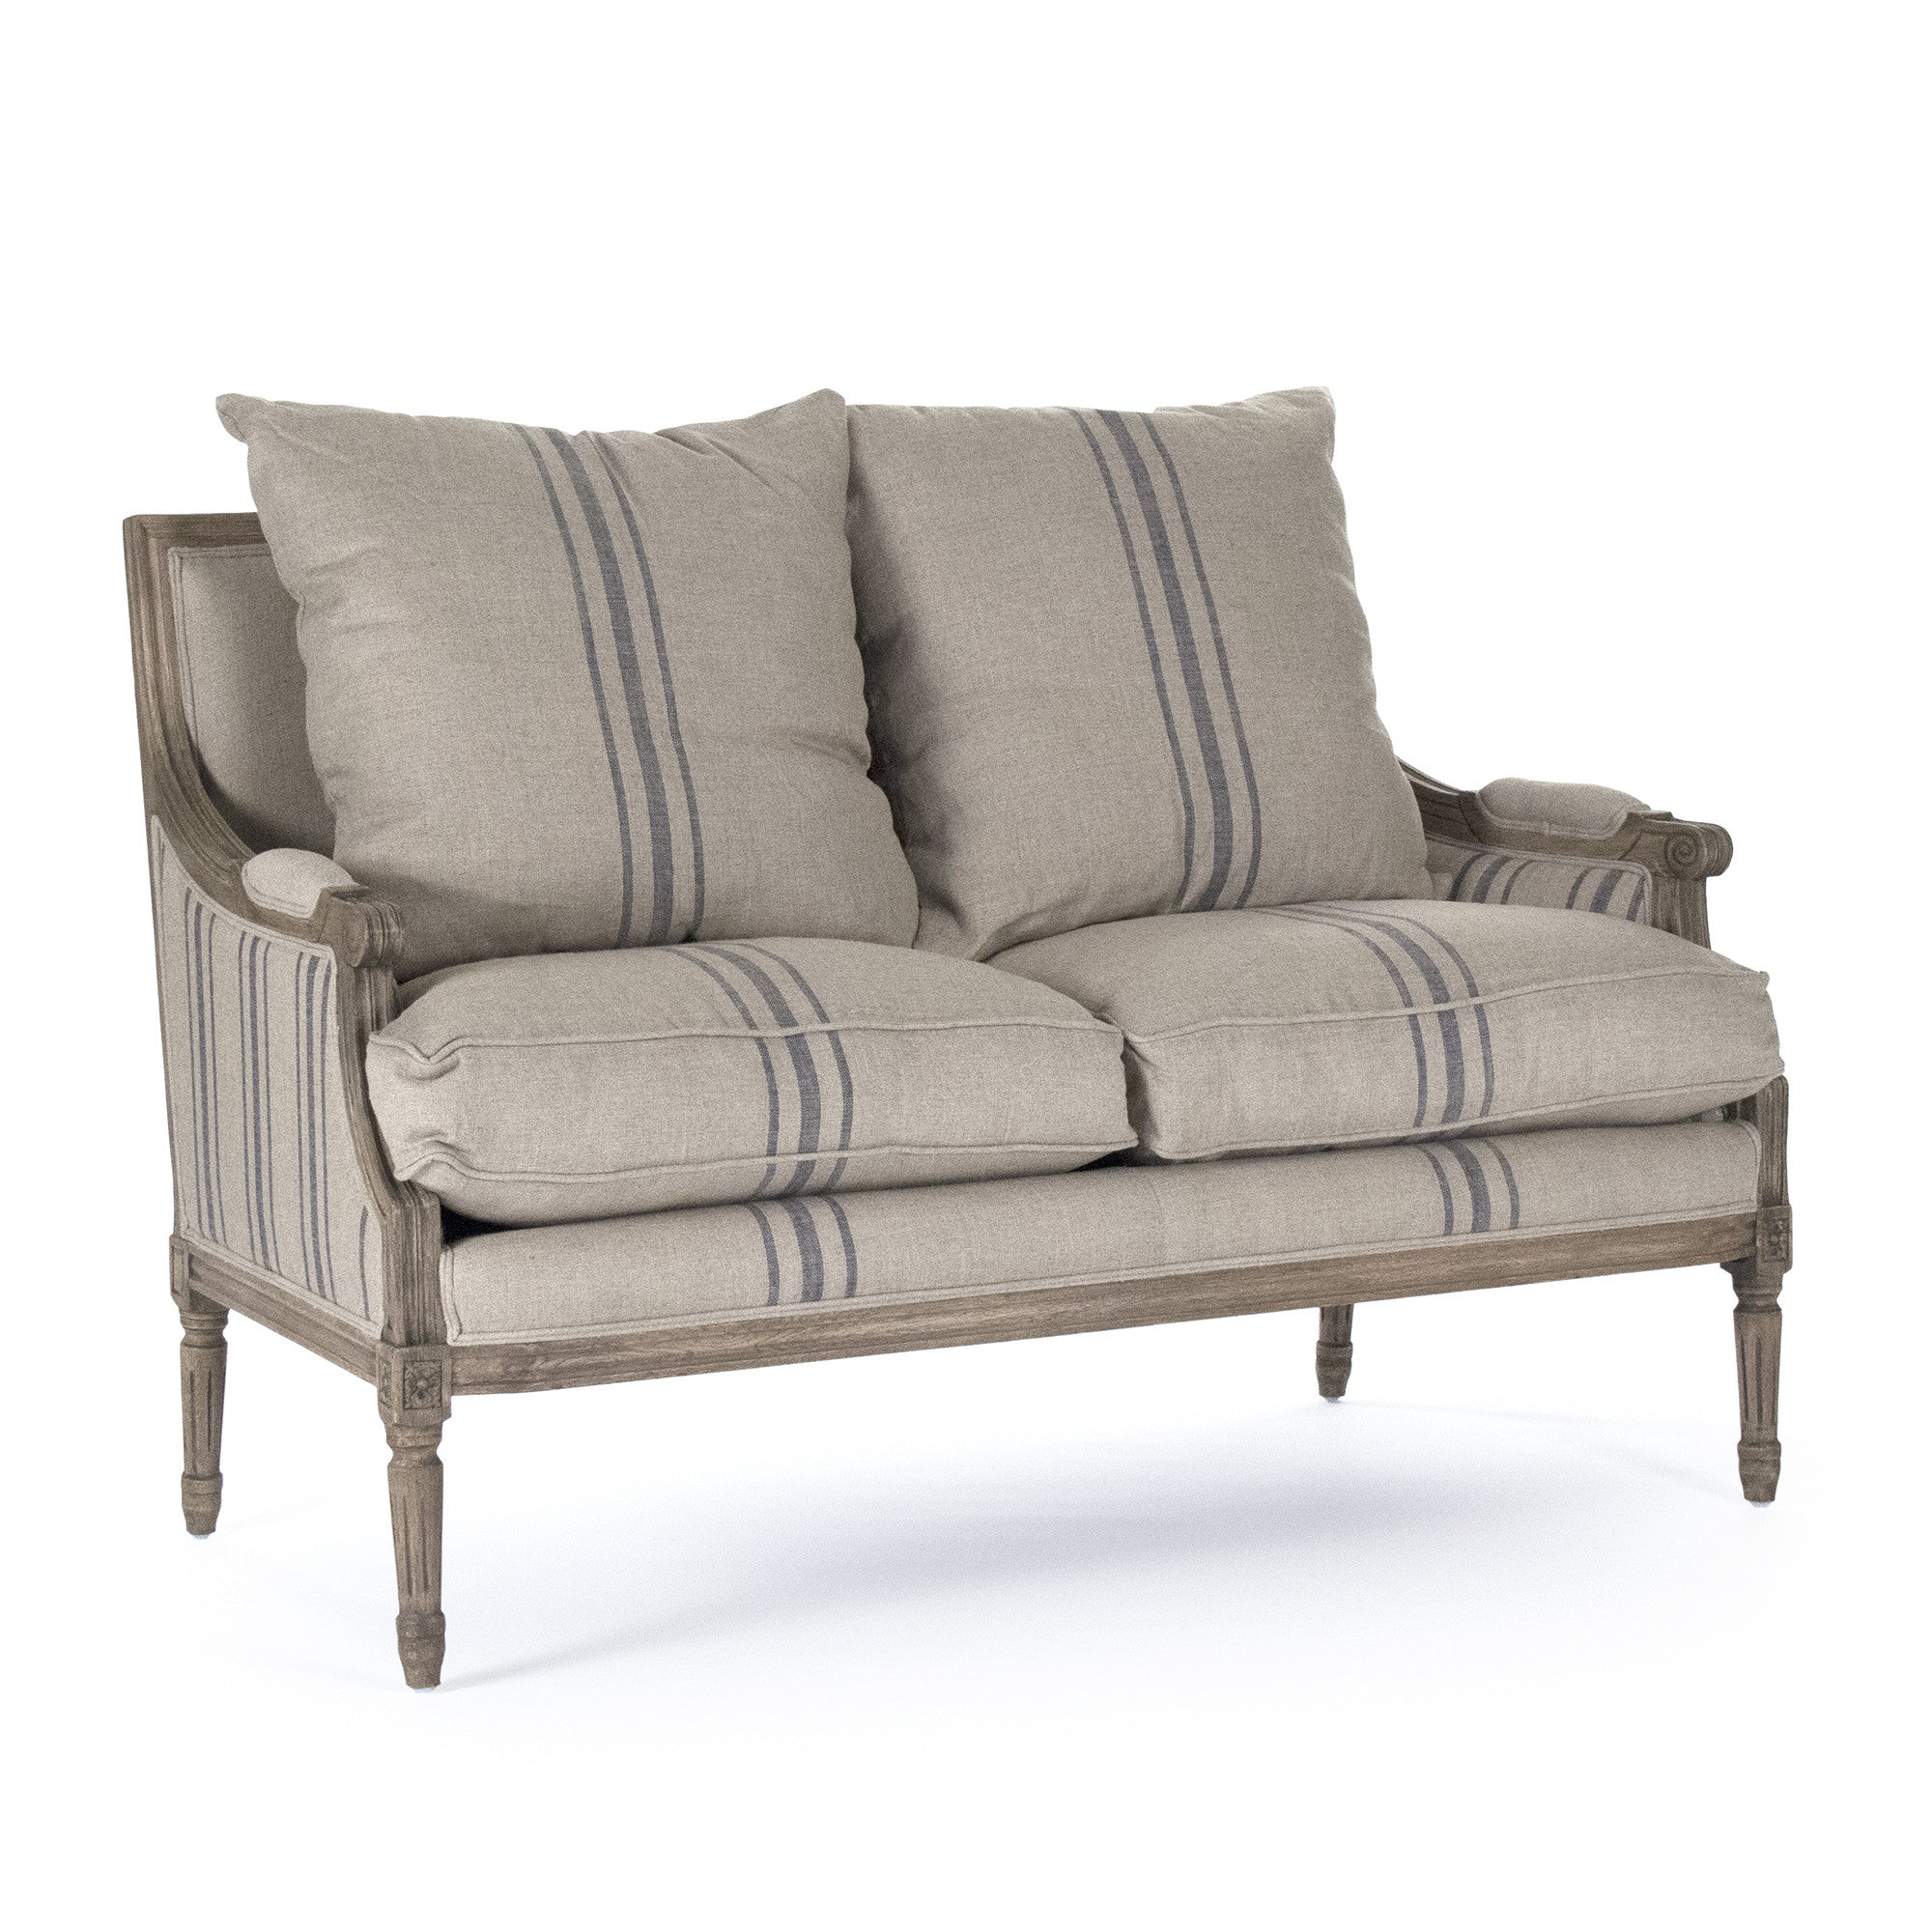 Sofa - Louis Settee, English Linen